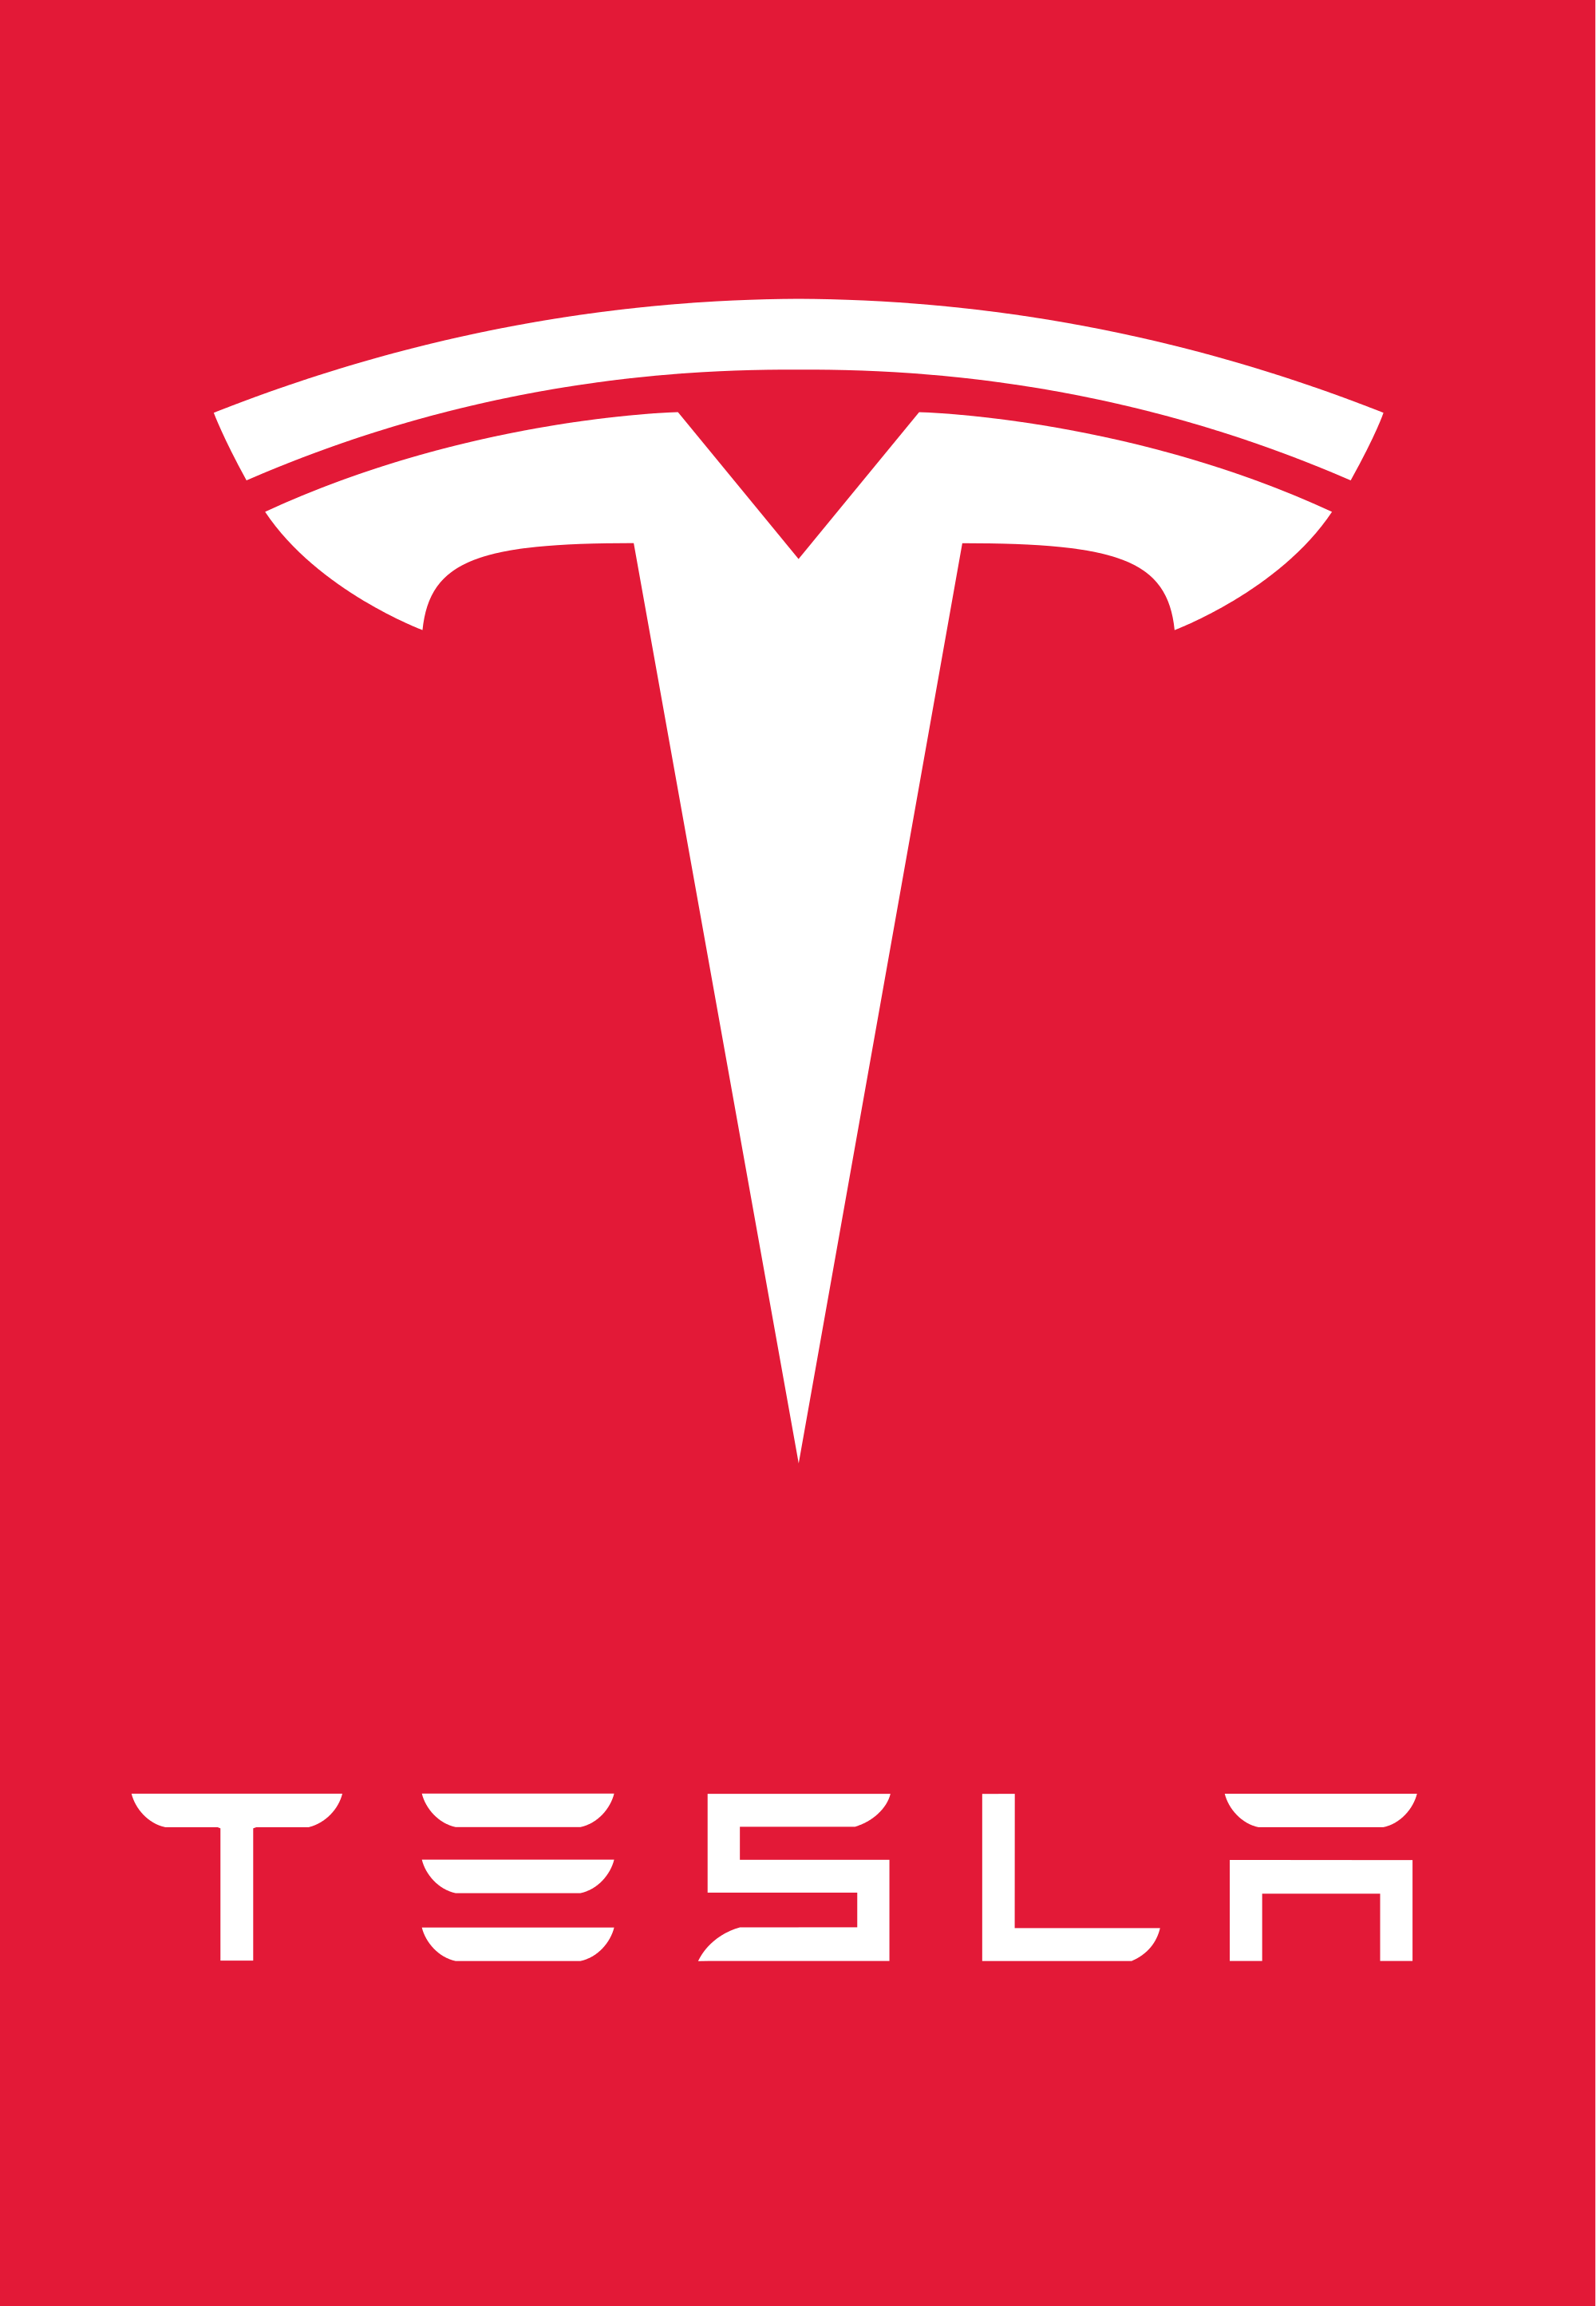 Tesla Red Logo - Tesla Logo, Tesla Car Symbol Meaning and History | Car Brand Names.com